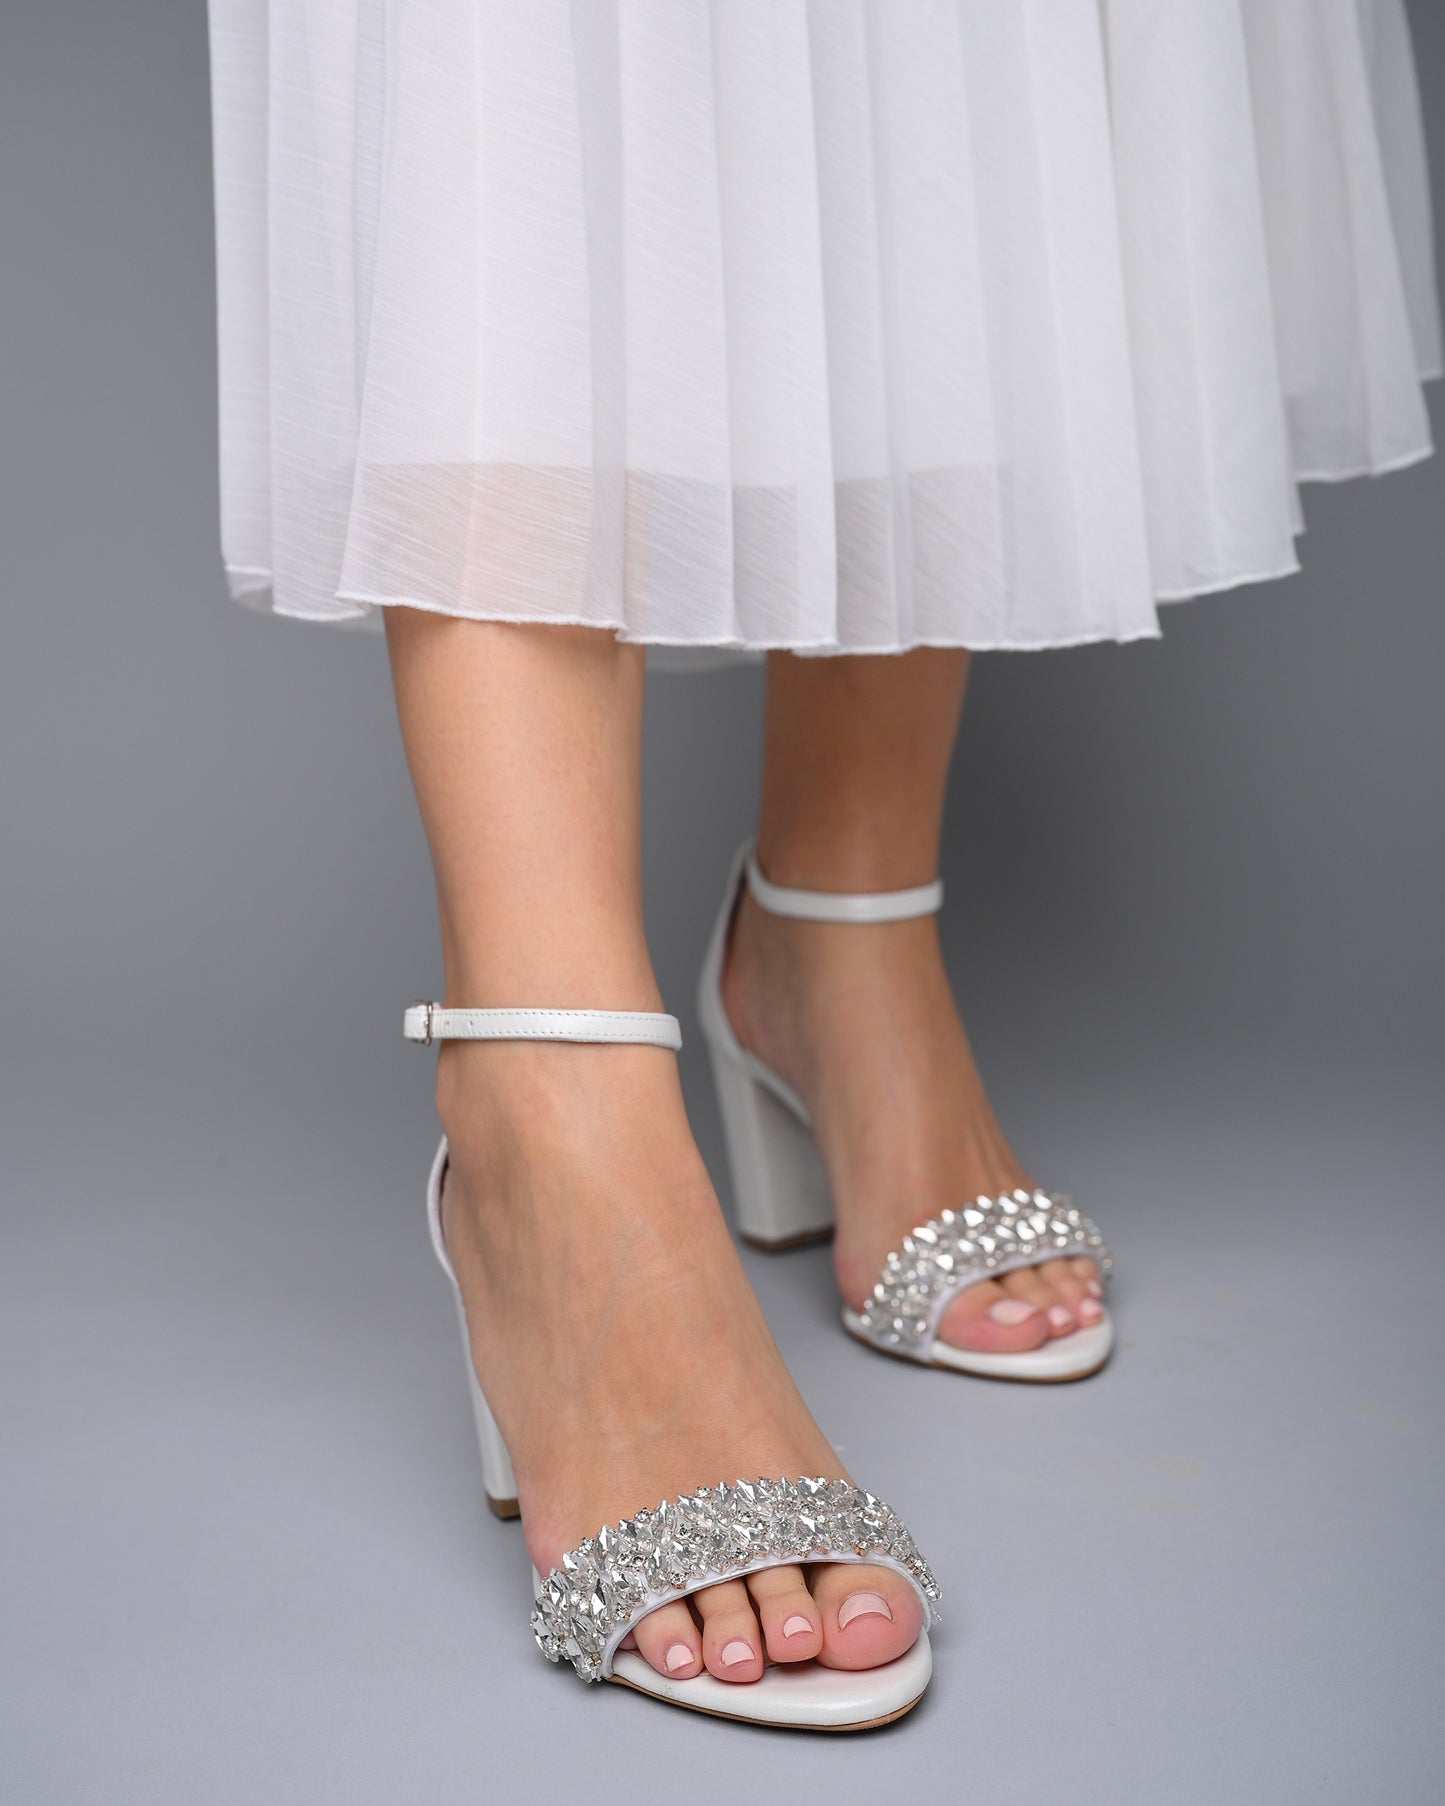 wedding shoes heels